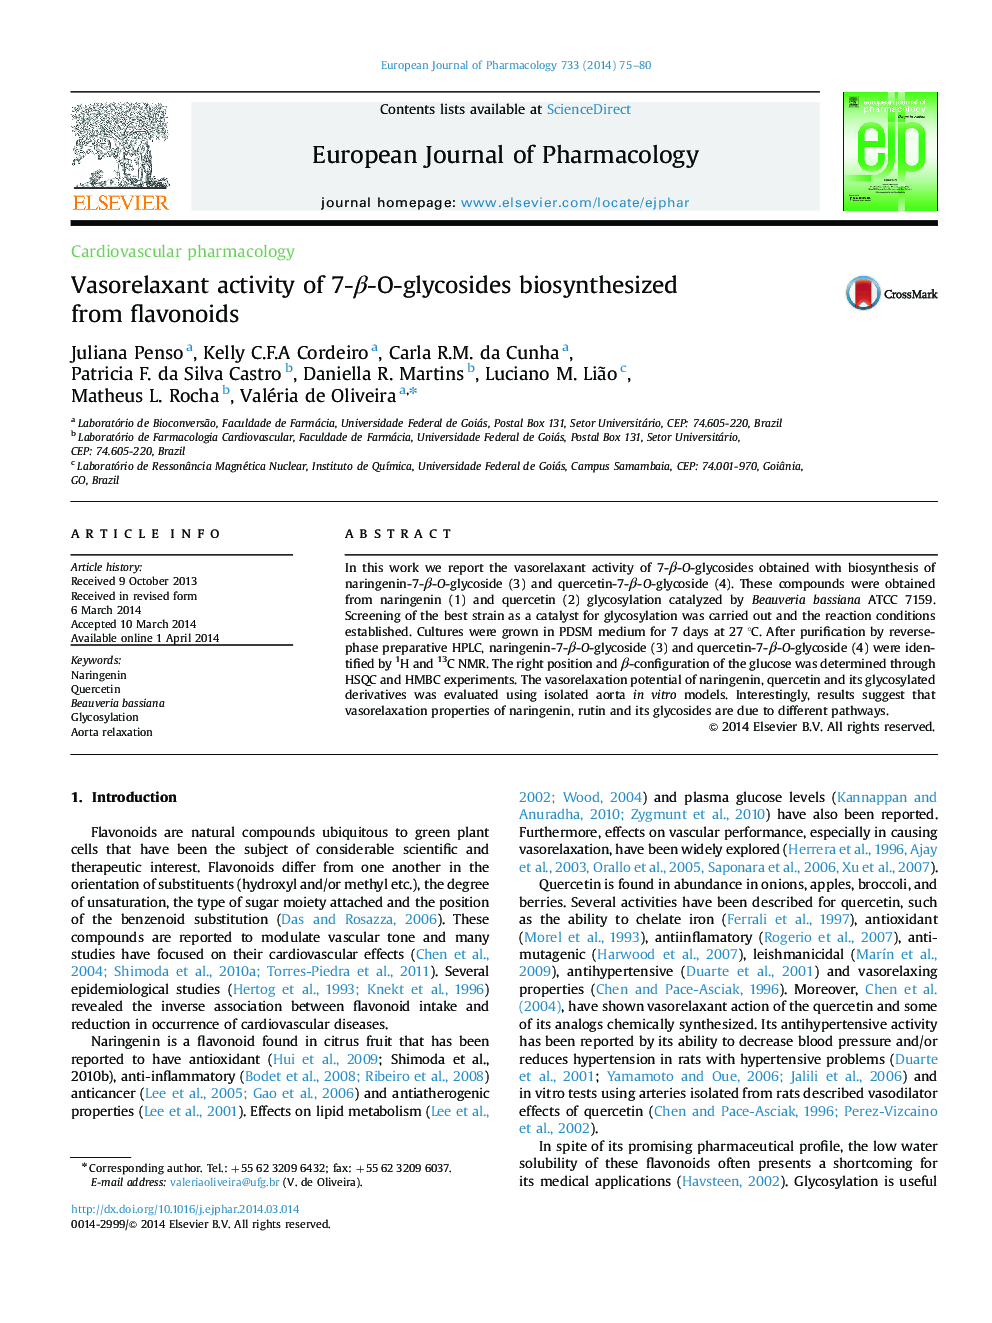 Vasorelaxant activity of 7-Î²-O-glycosides biosynthesized from flavonoids